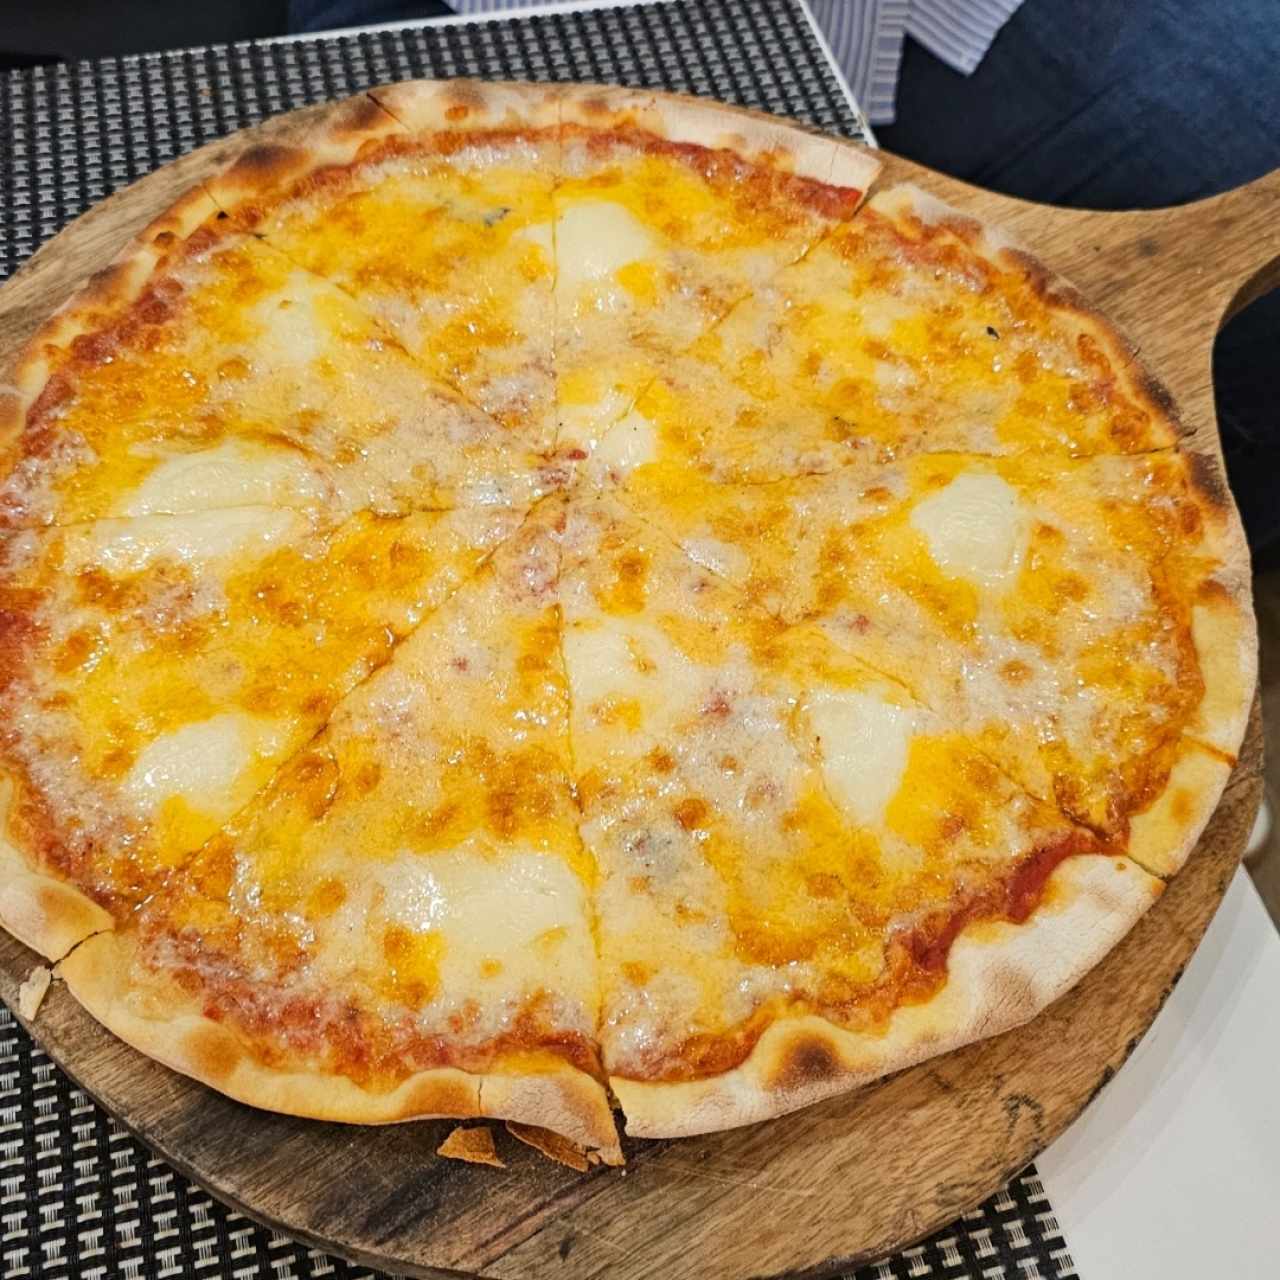 Pizze Speciali - Pizza 4 Queso